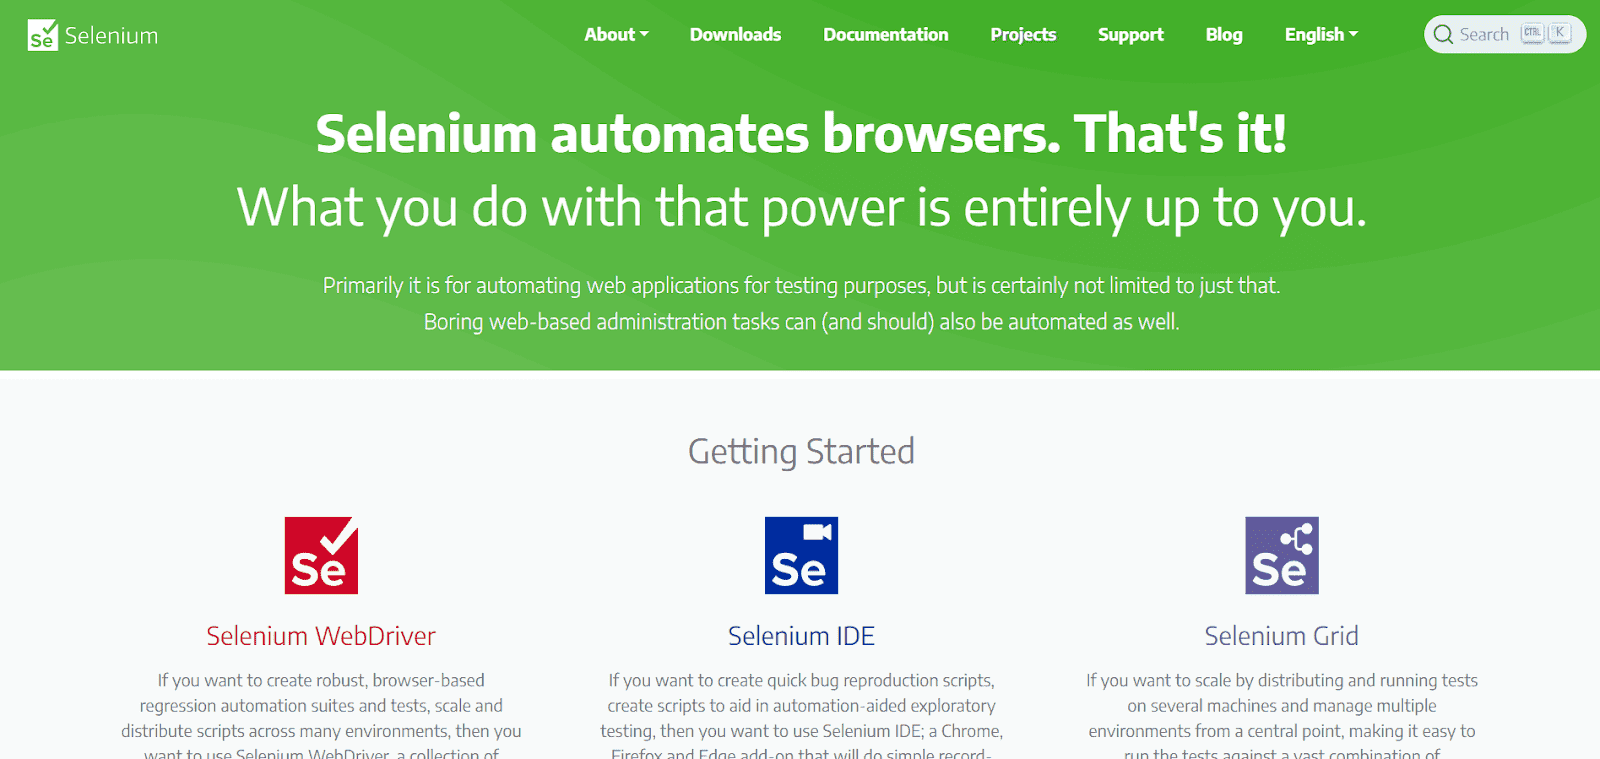 Selenium, a popular open-source suite of tools